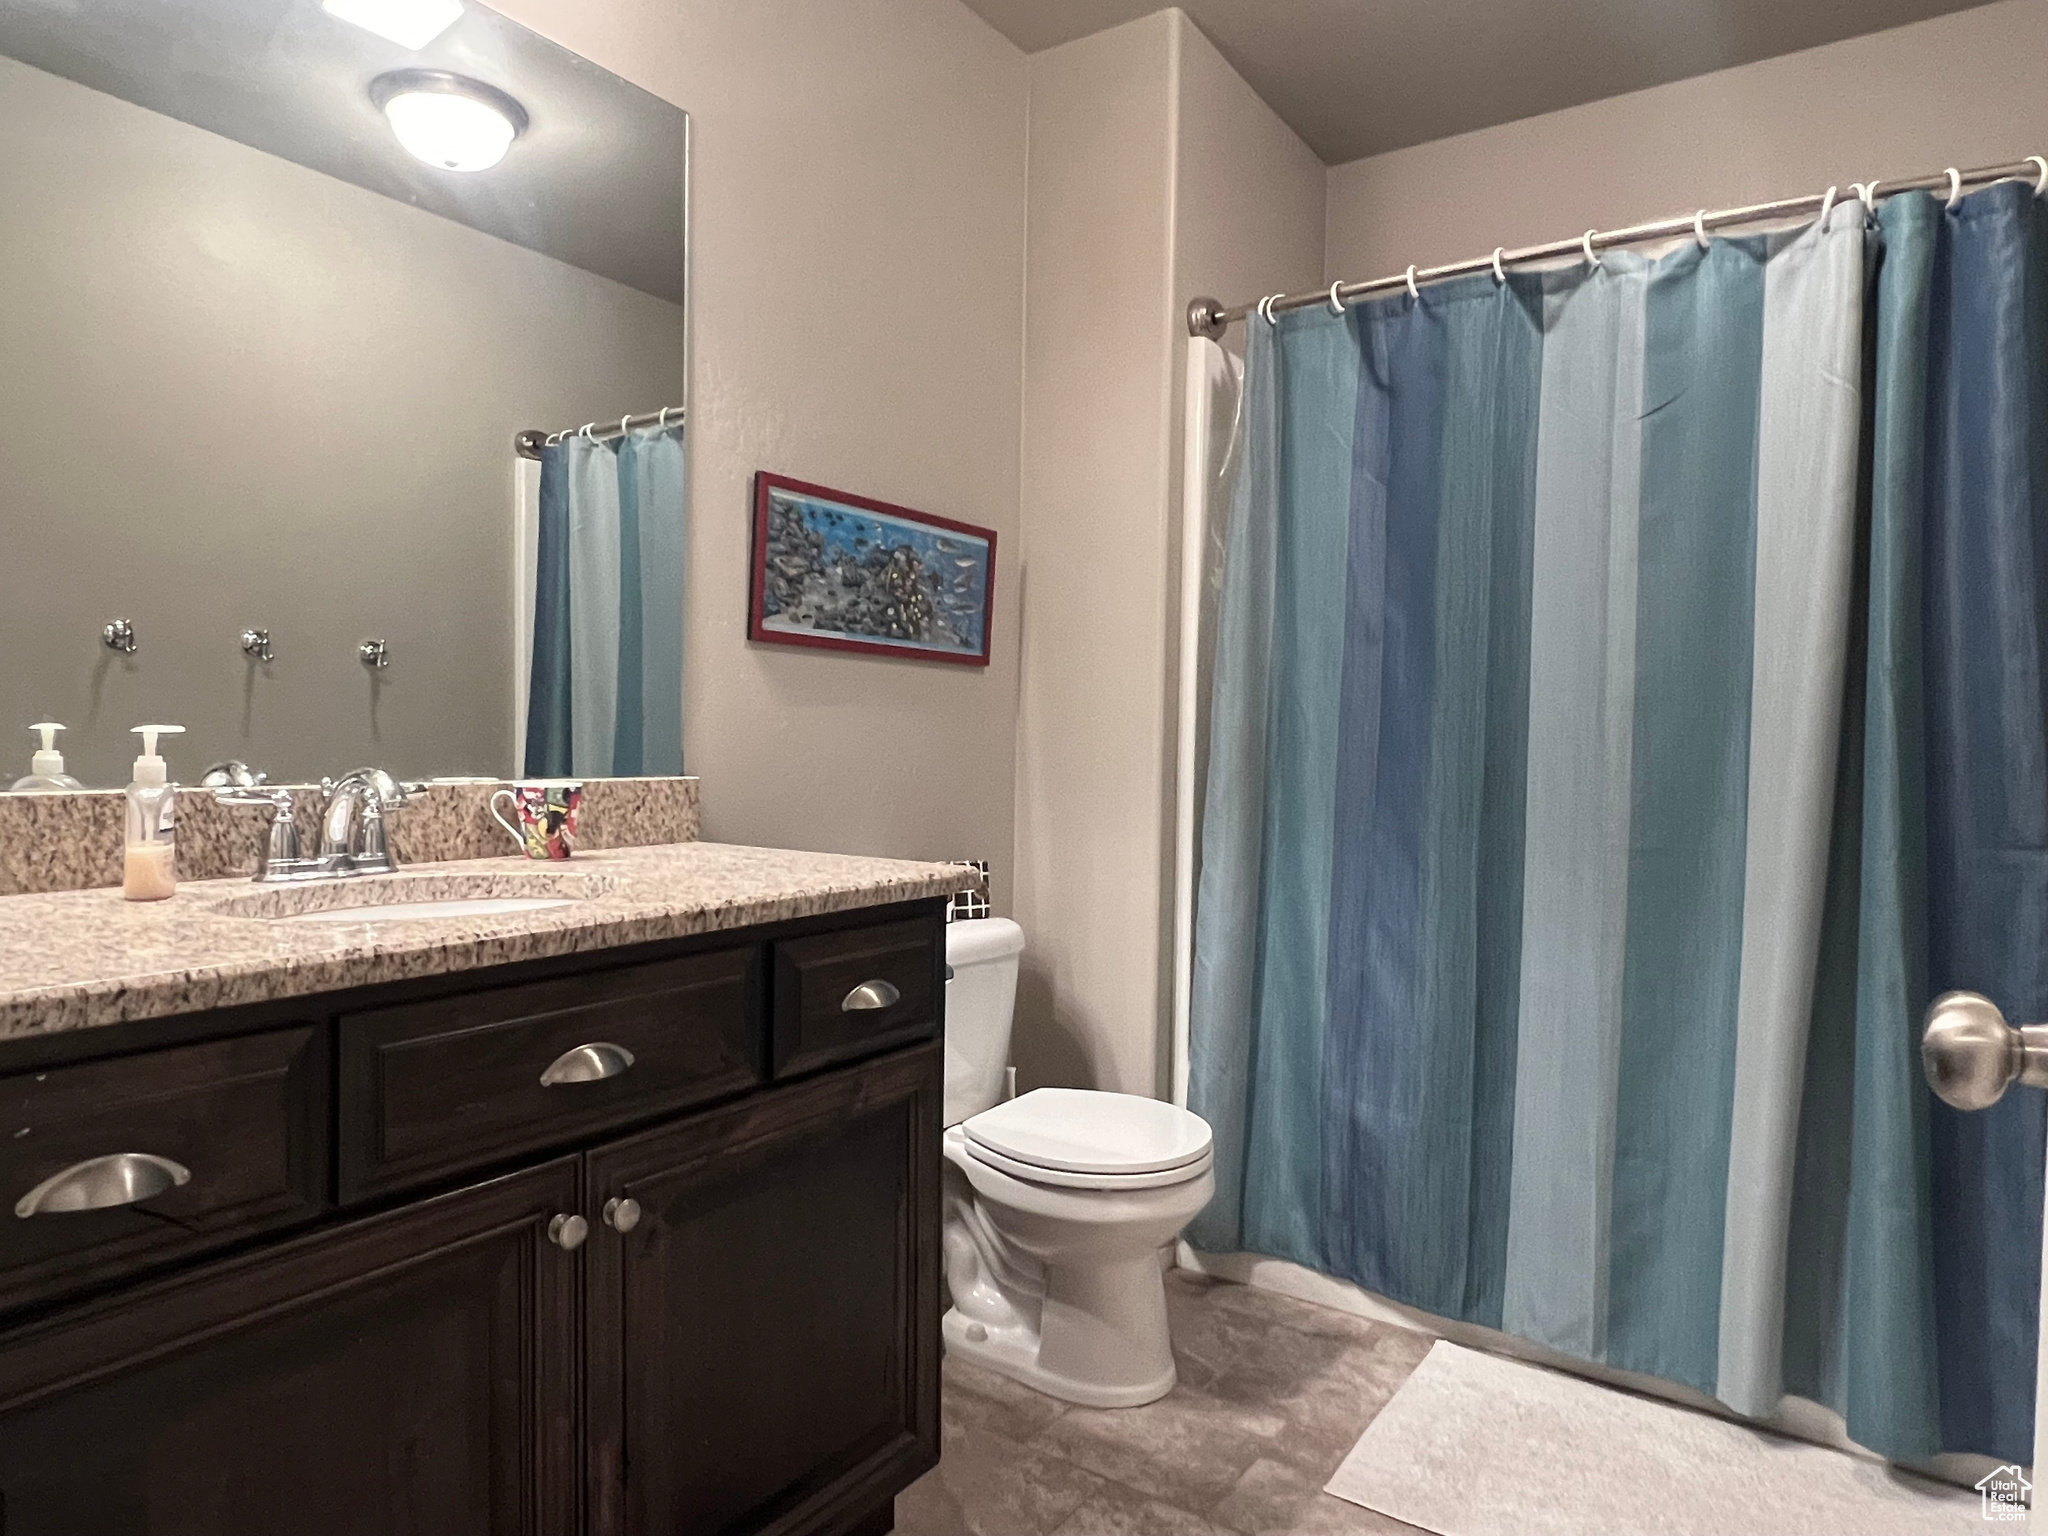 Basement Bathroom with vanity, toilet, and tile flooring